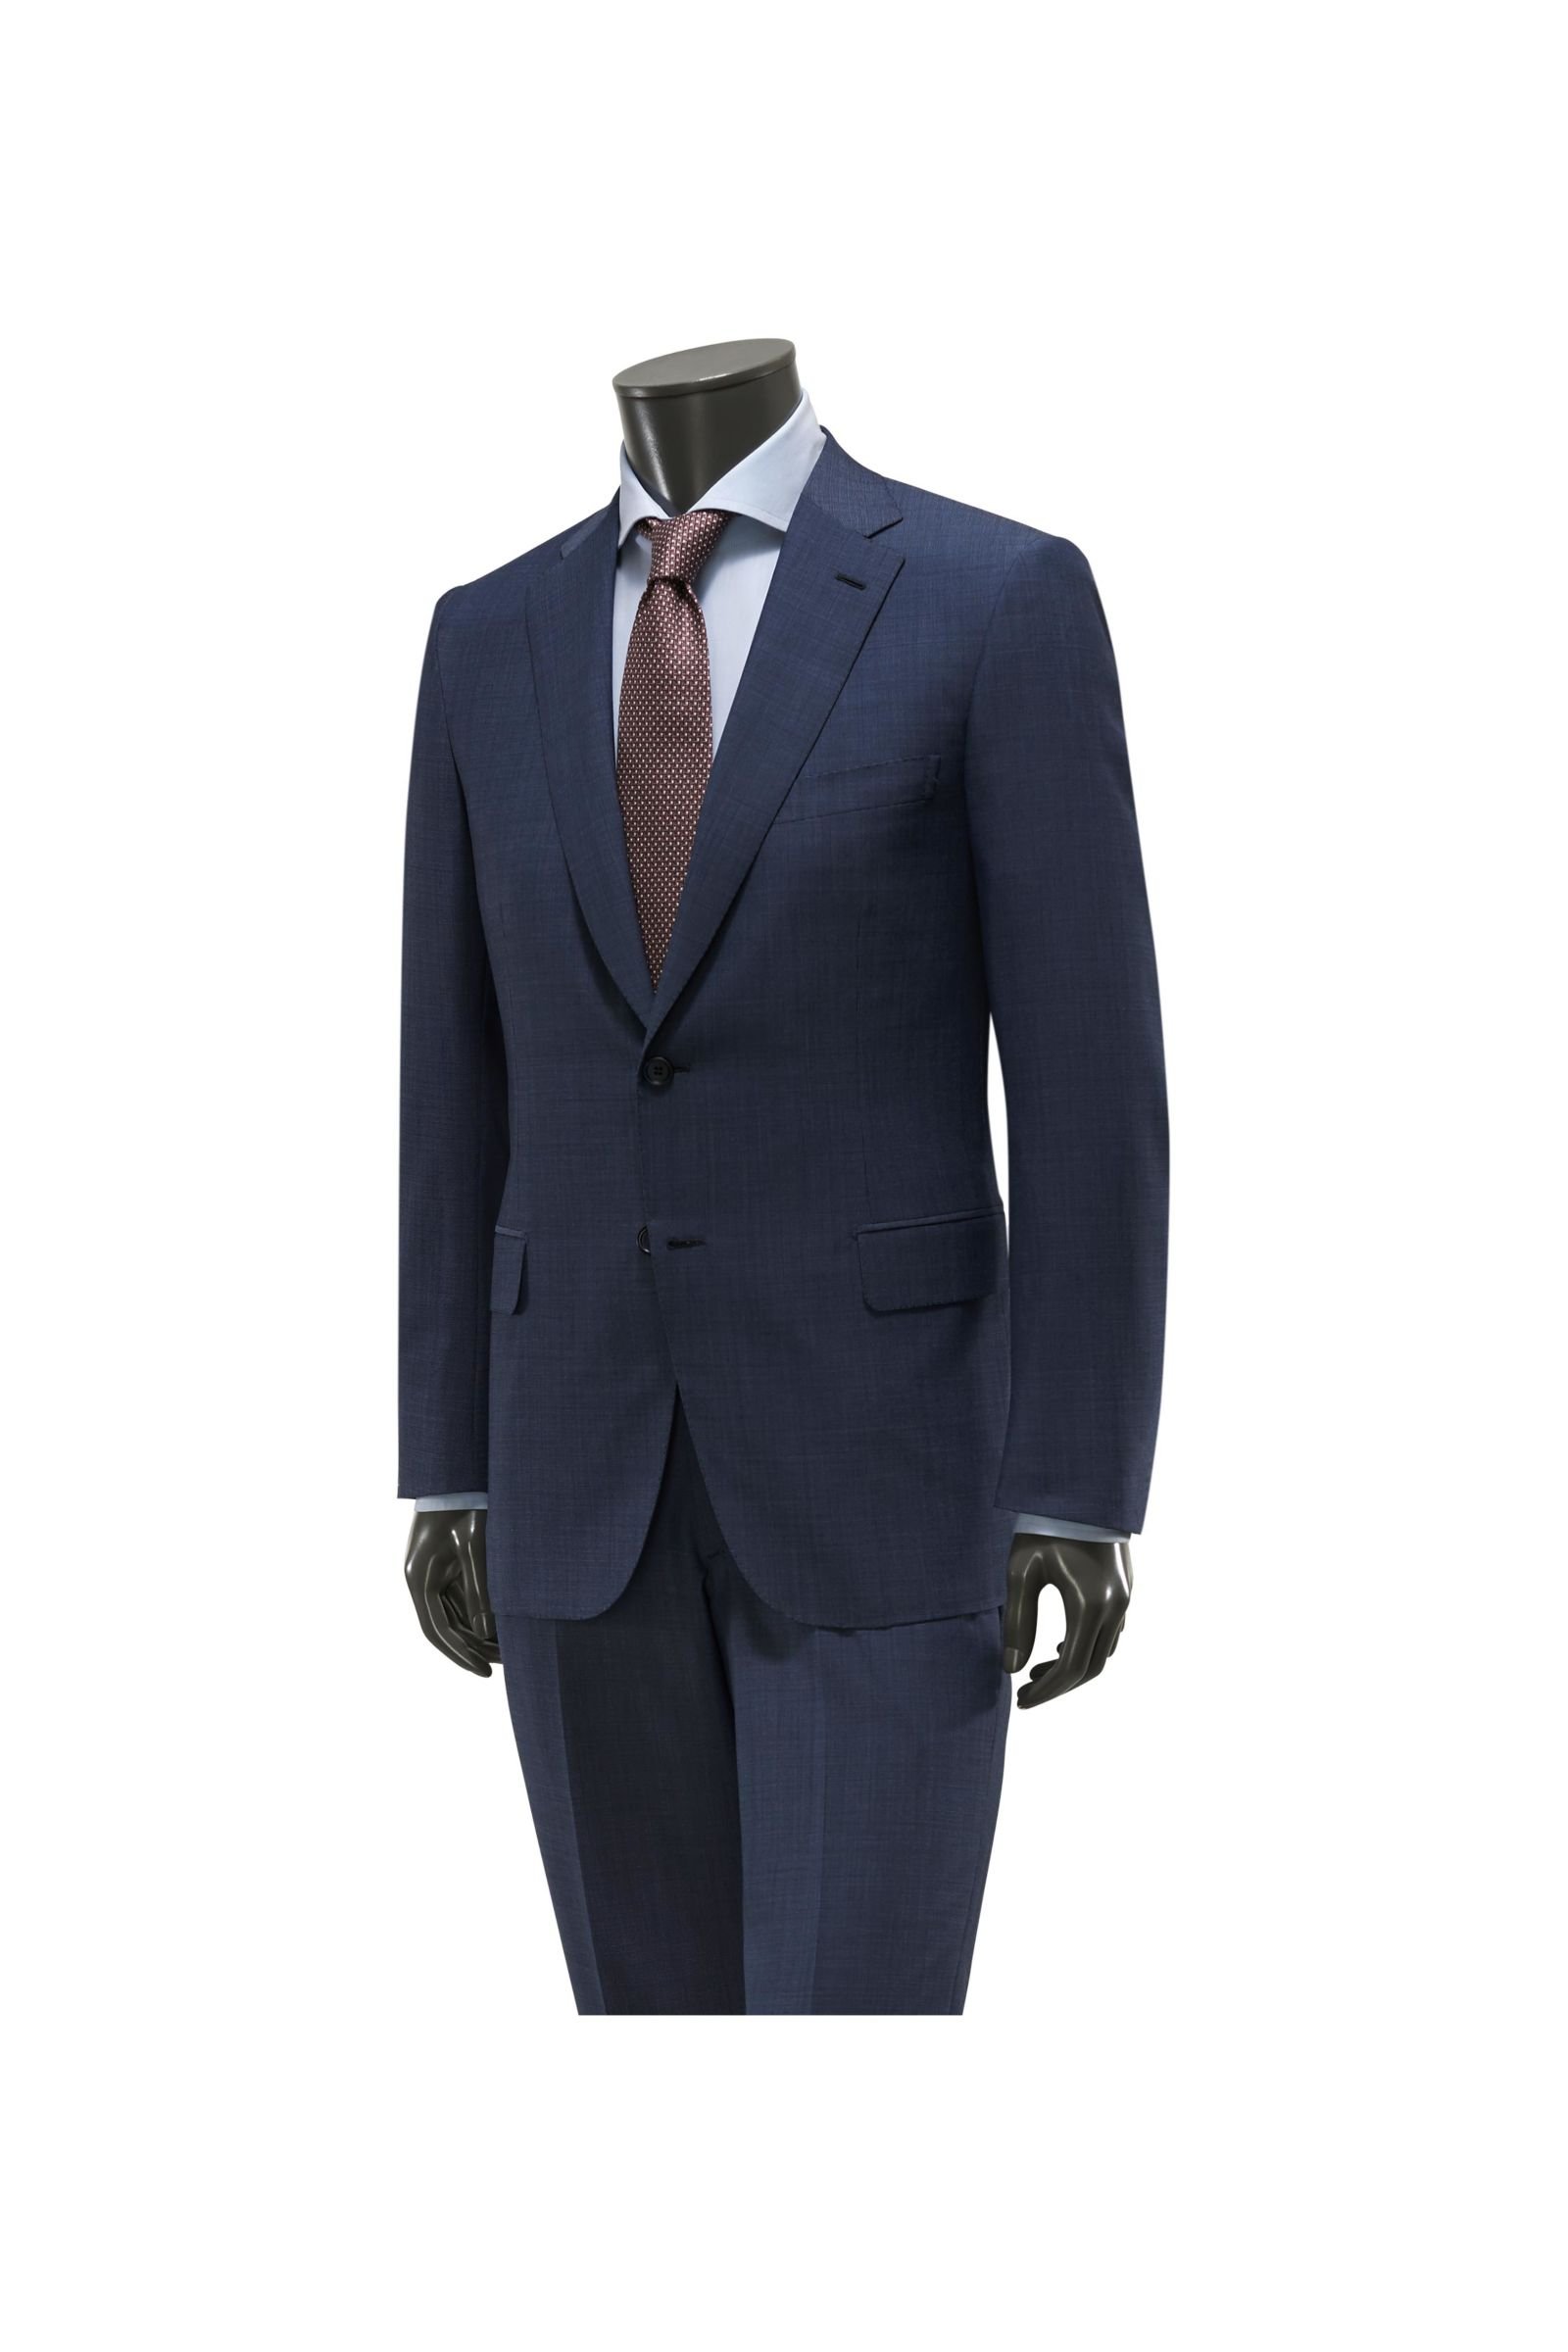 Suit 'Brunico' grey-blue